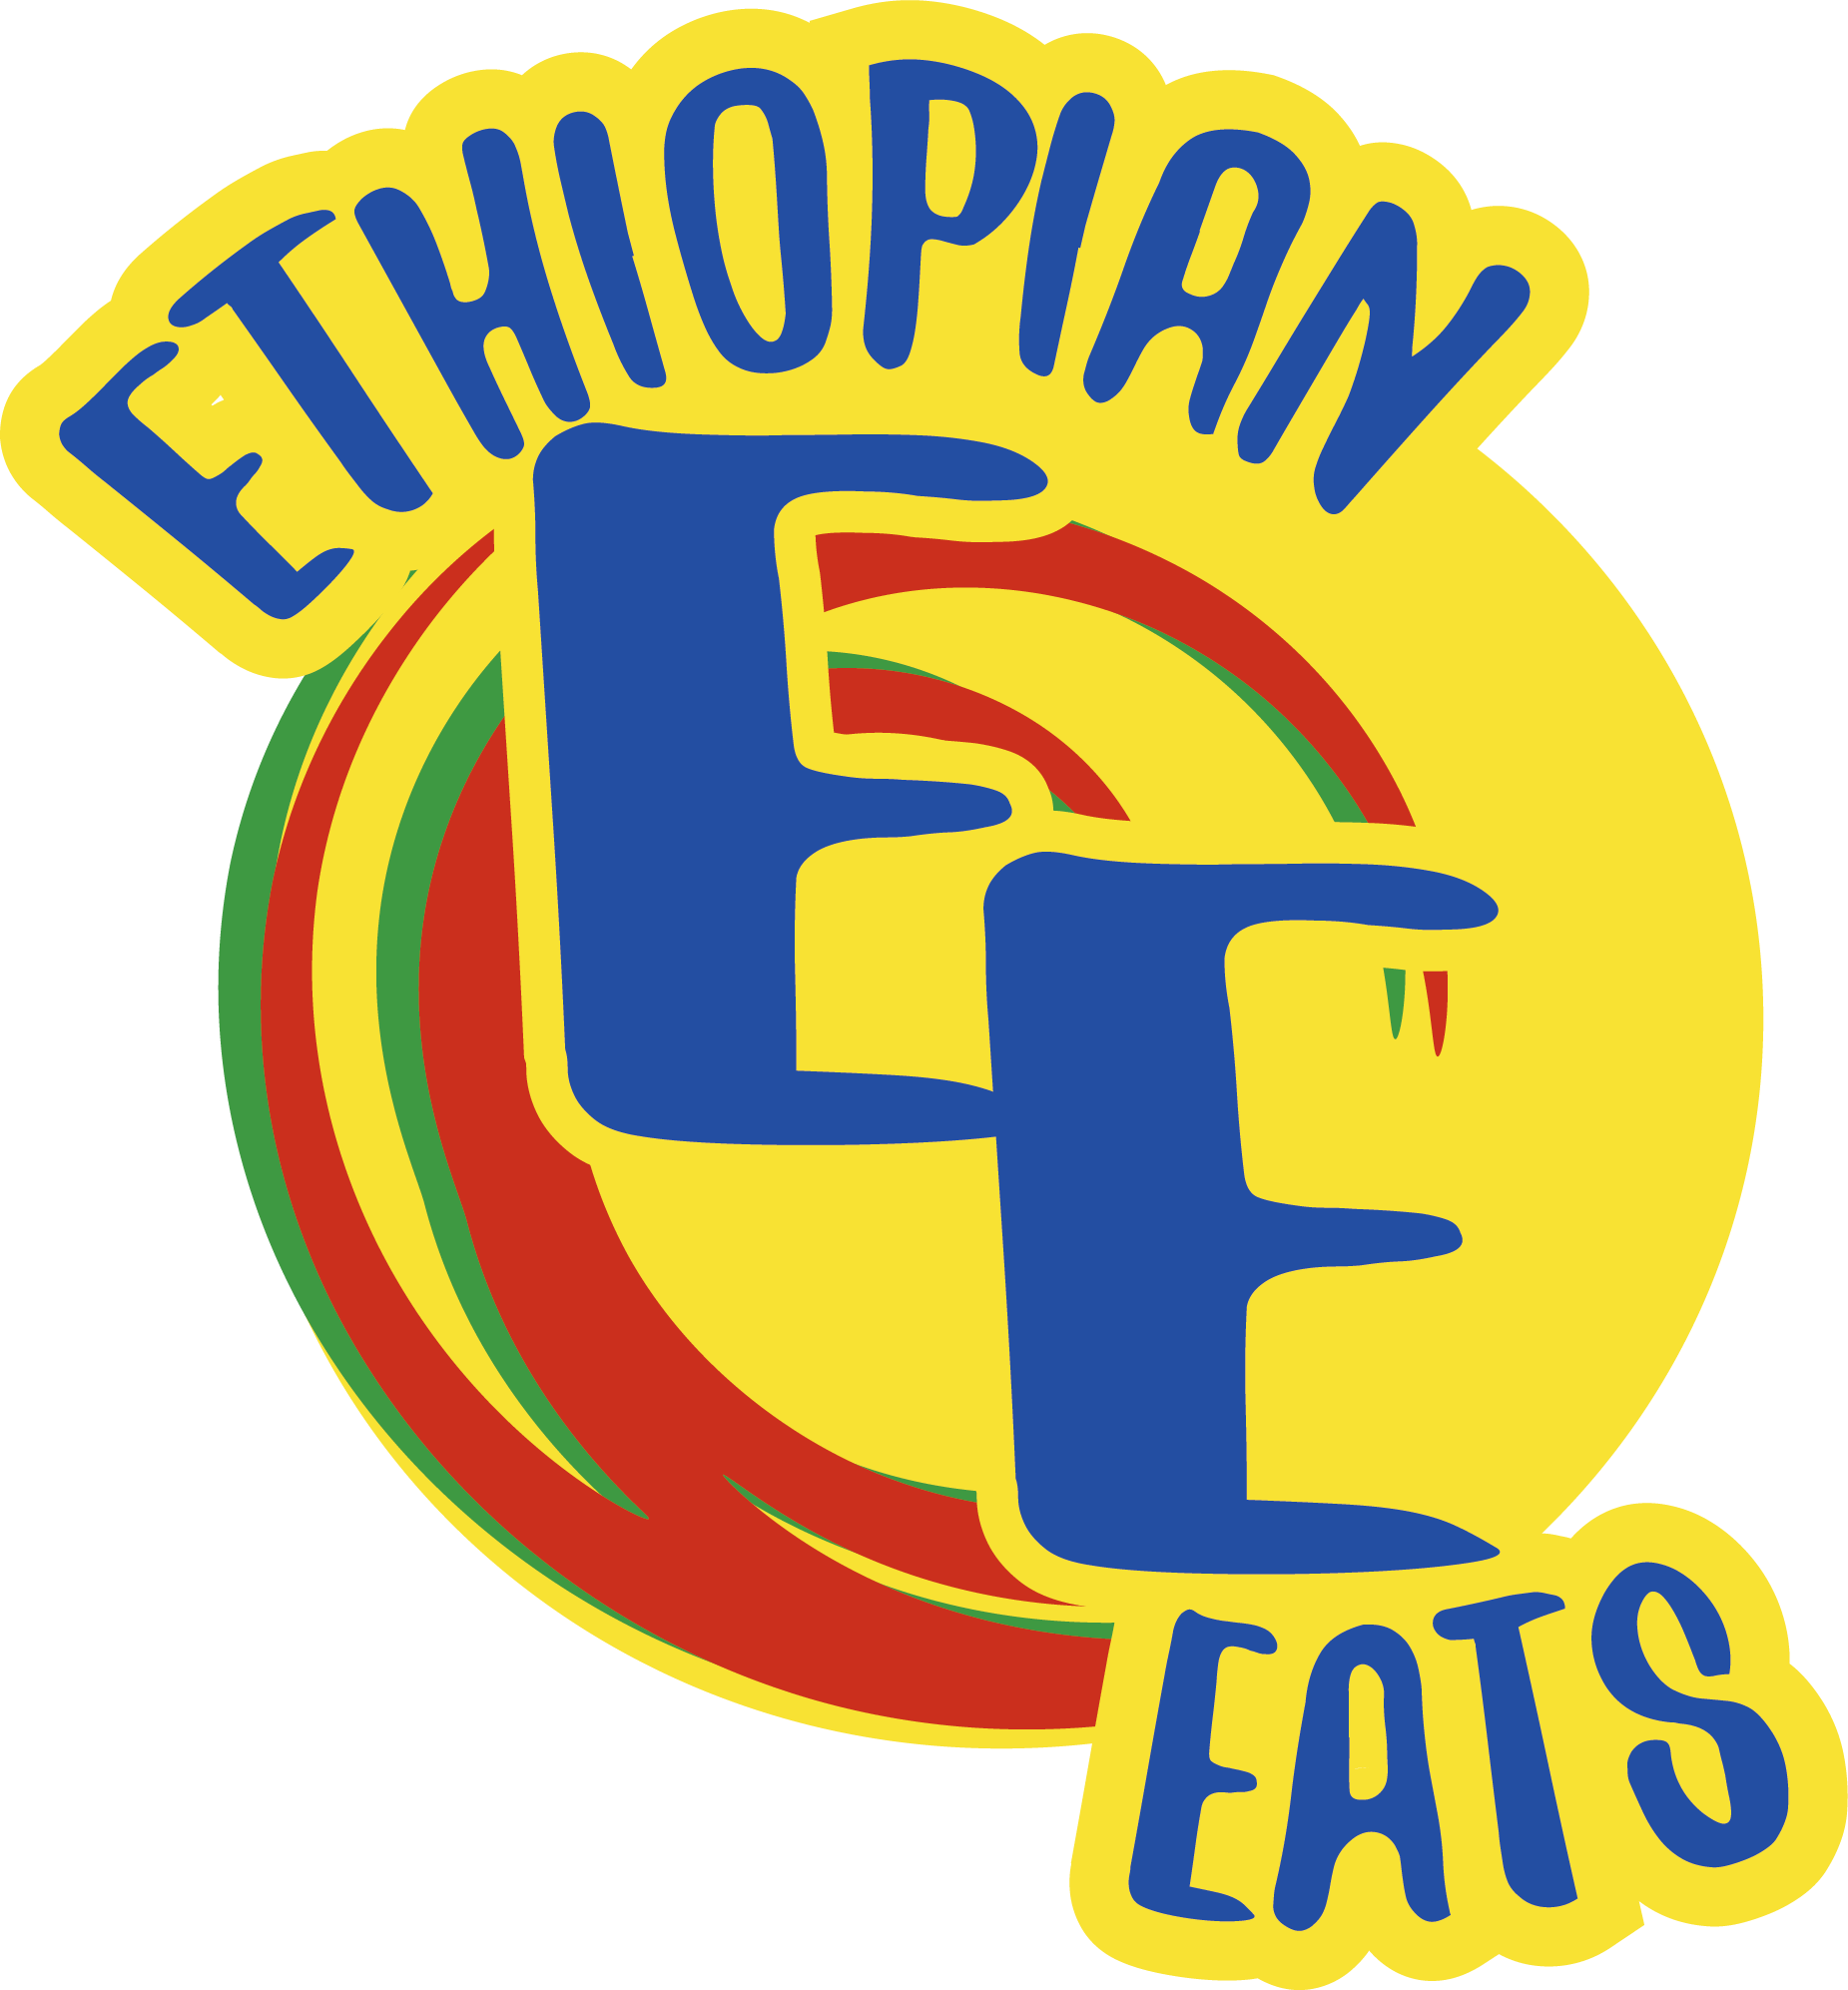 EthiopianEats_Logo - Martha Tsegaye.png